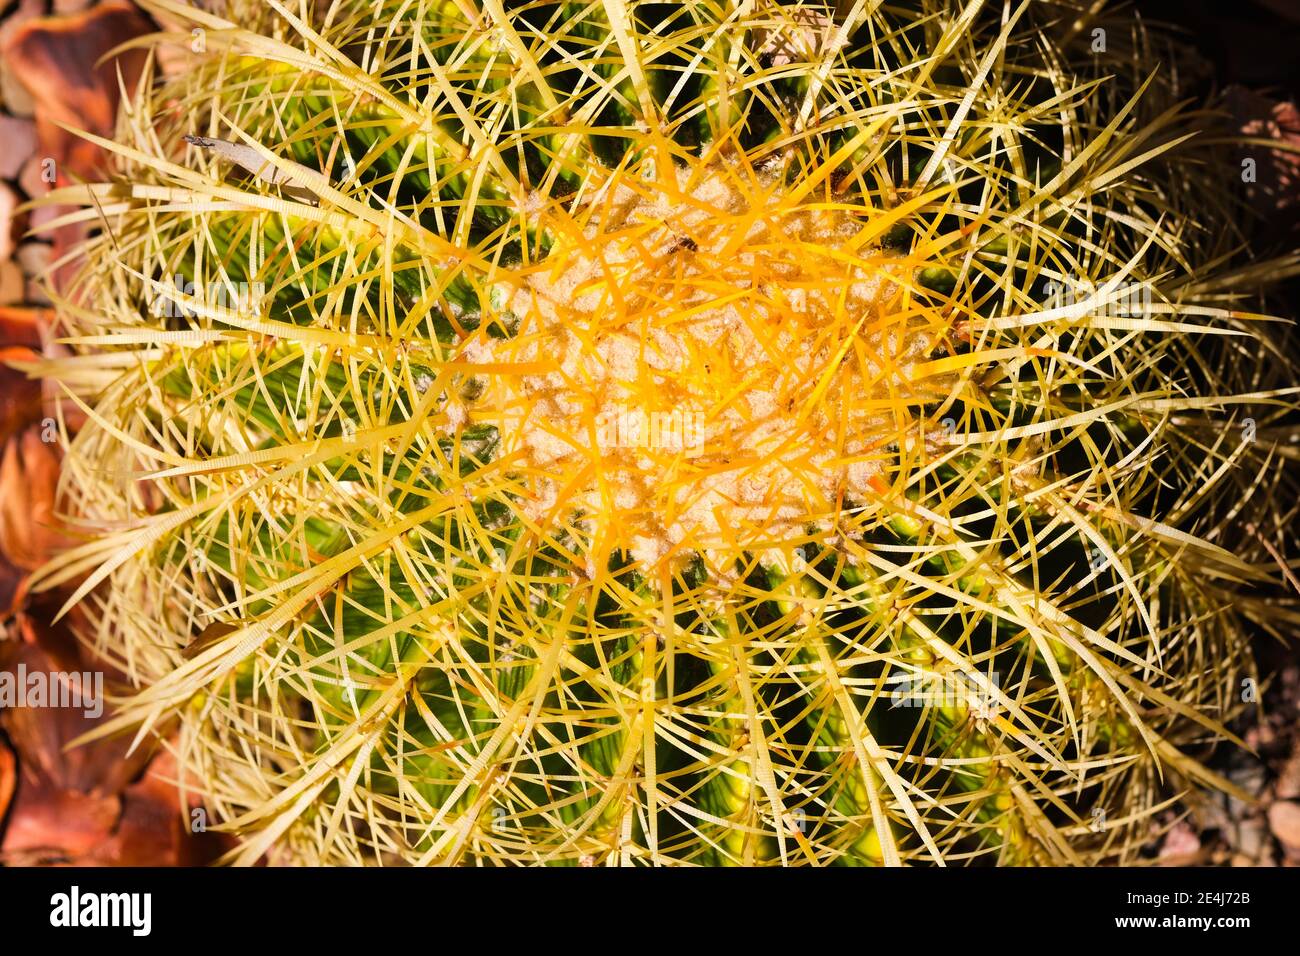 A Golden Ball cactus growing in the Botanic Gardens of Adelaide Australia Stock Photo